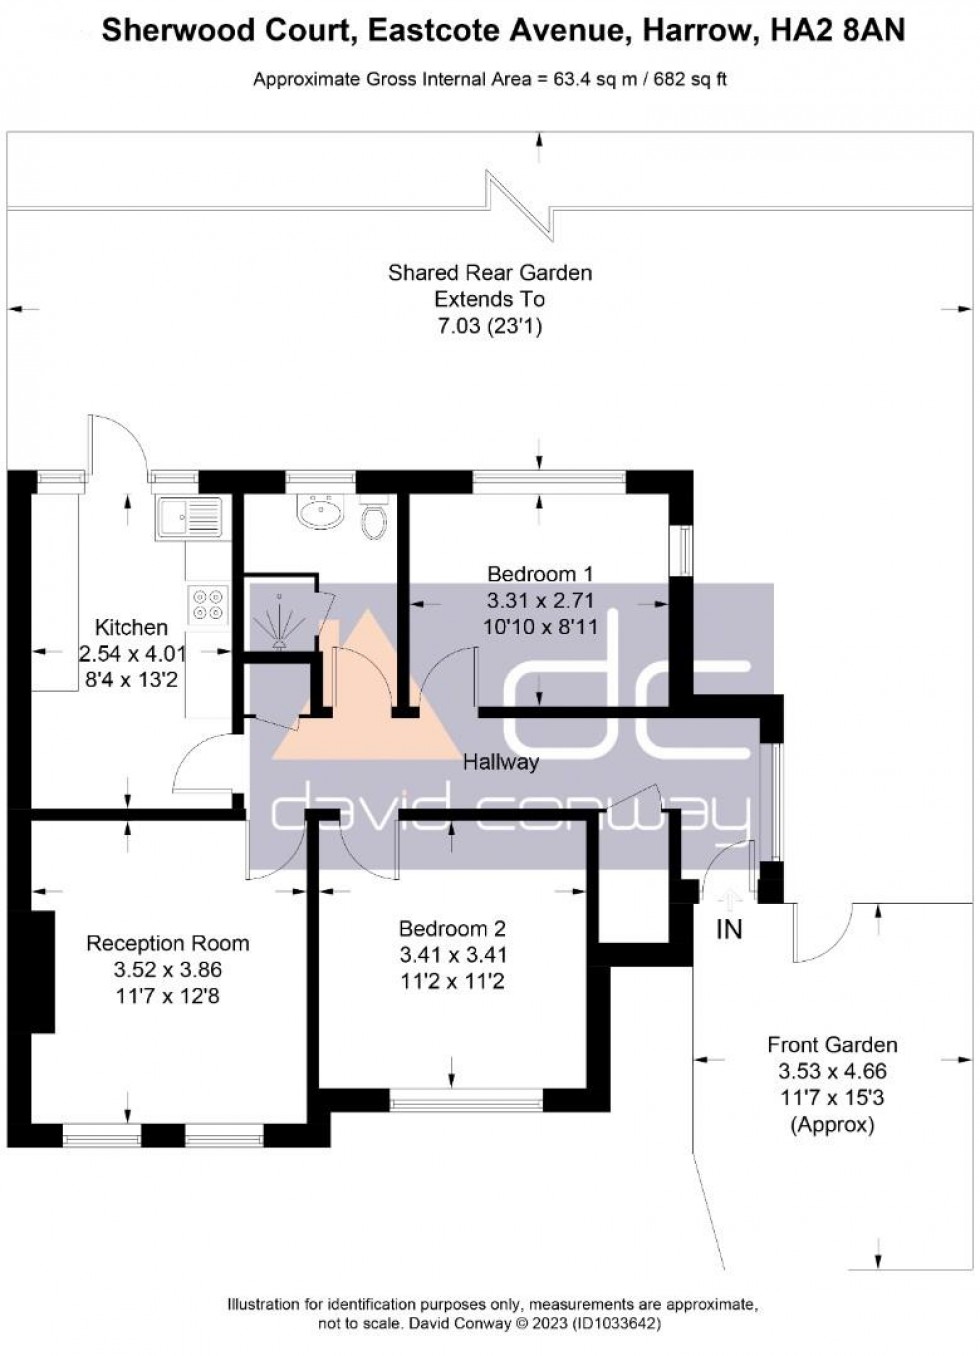 Floorplan for Sherwood Court, Eastcote Avenue, Harrow, HA2 8AN